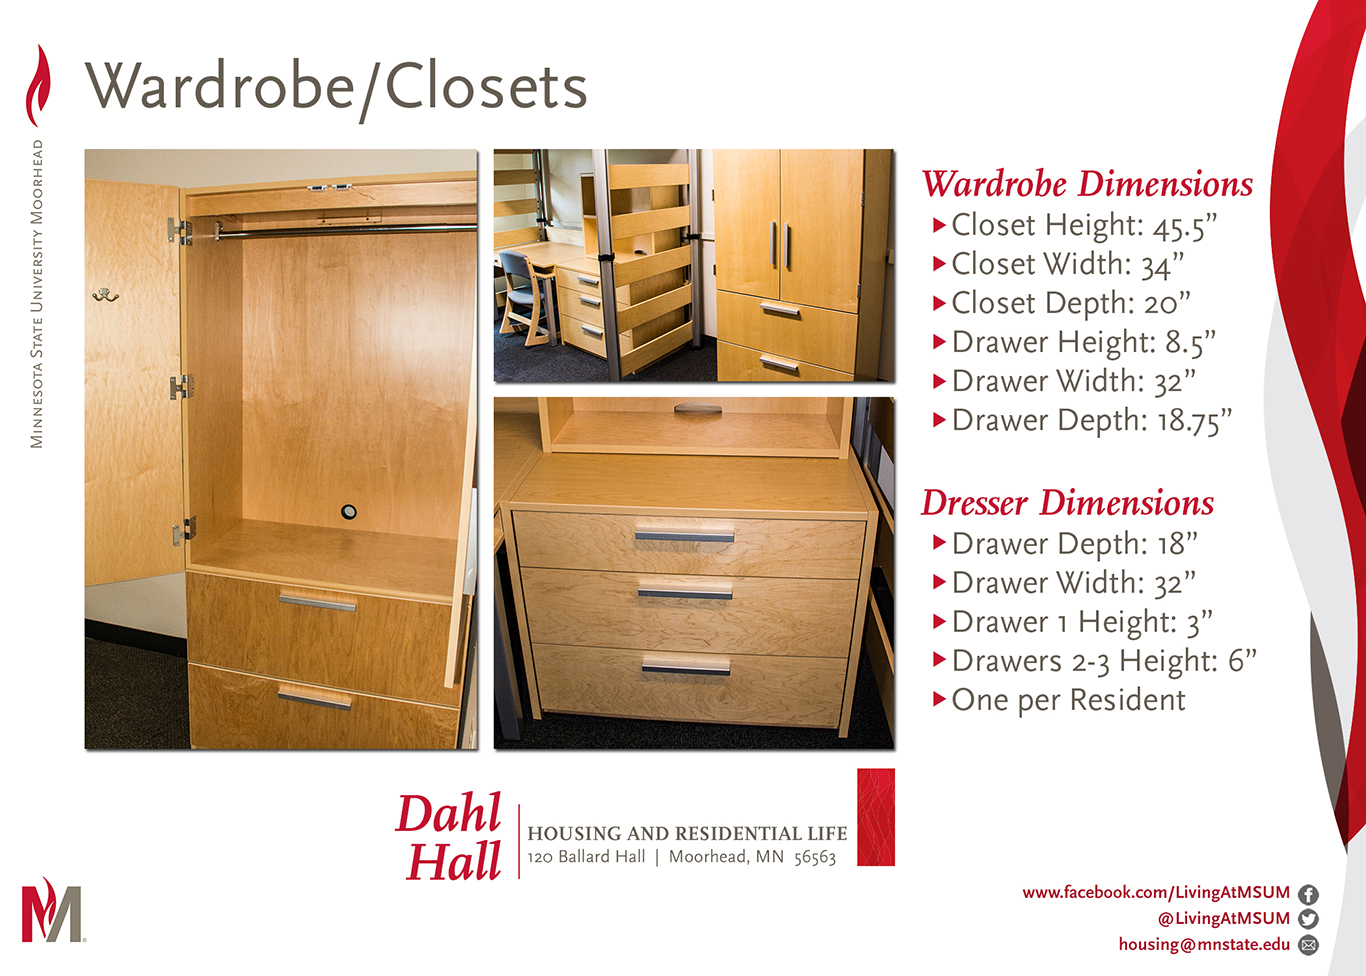 Dahl Hall Wardrobe